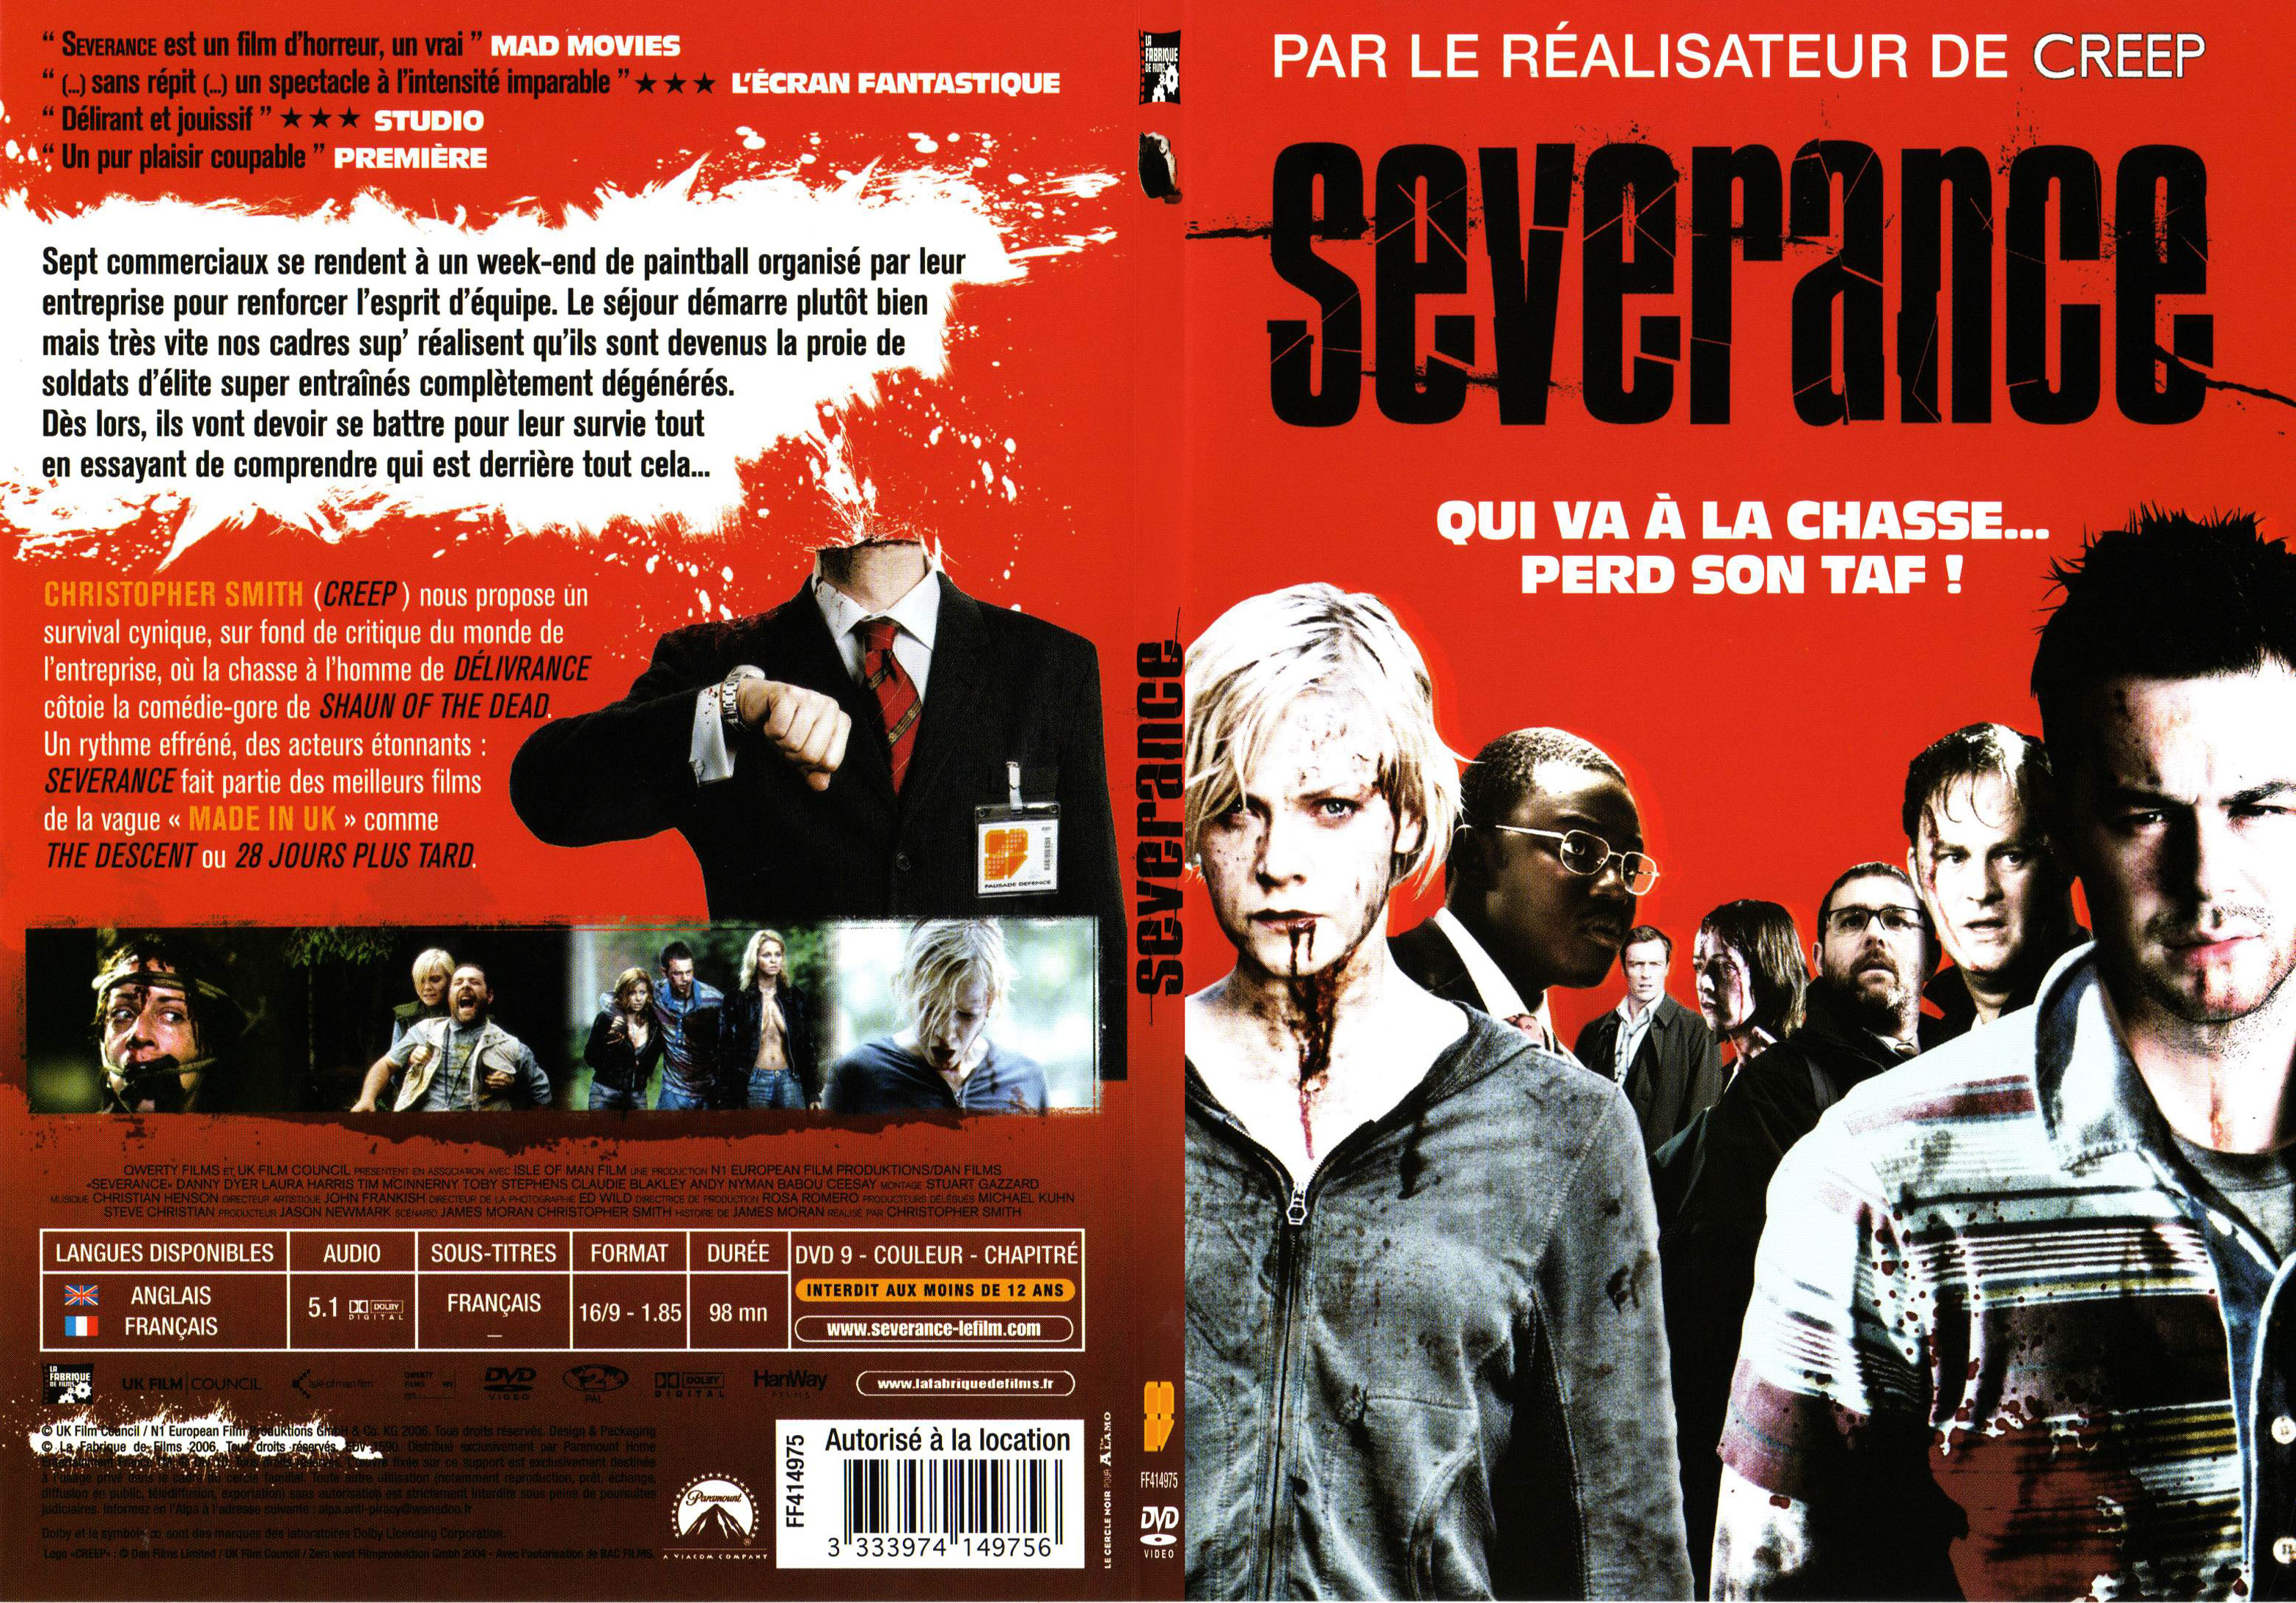 Jaquette DVD Severance - SLIM